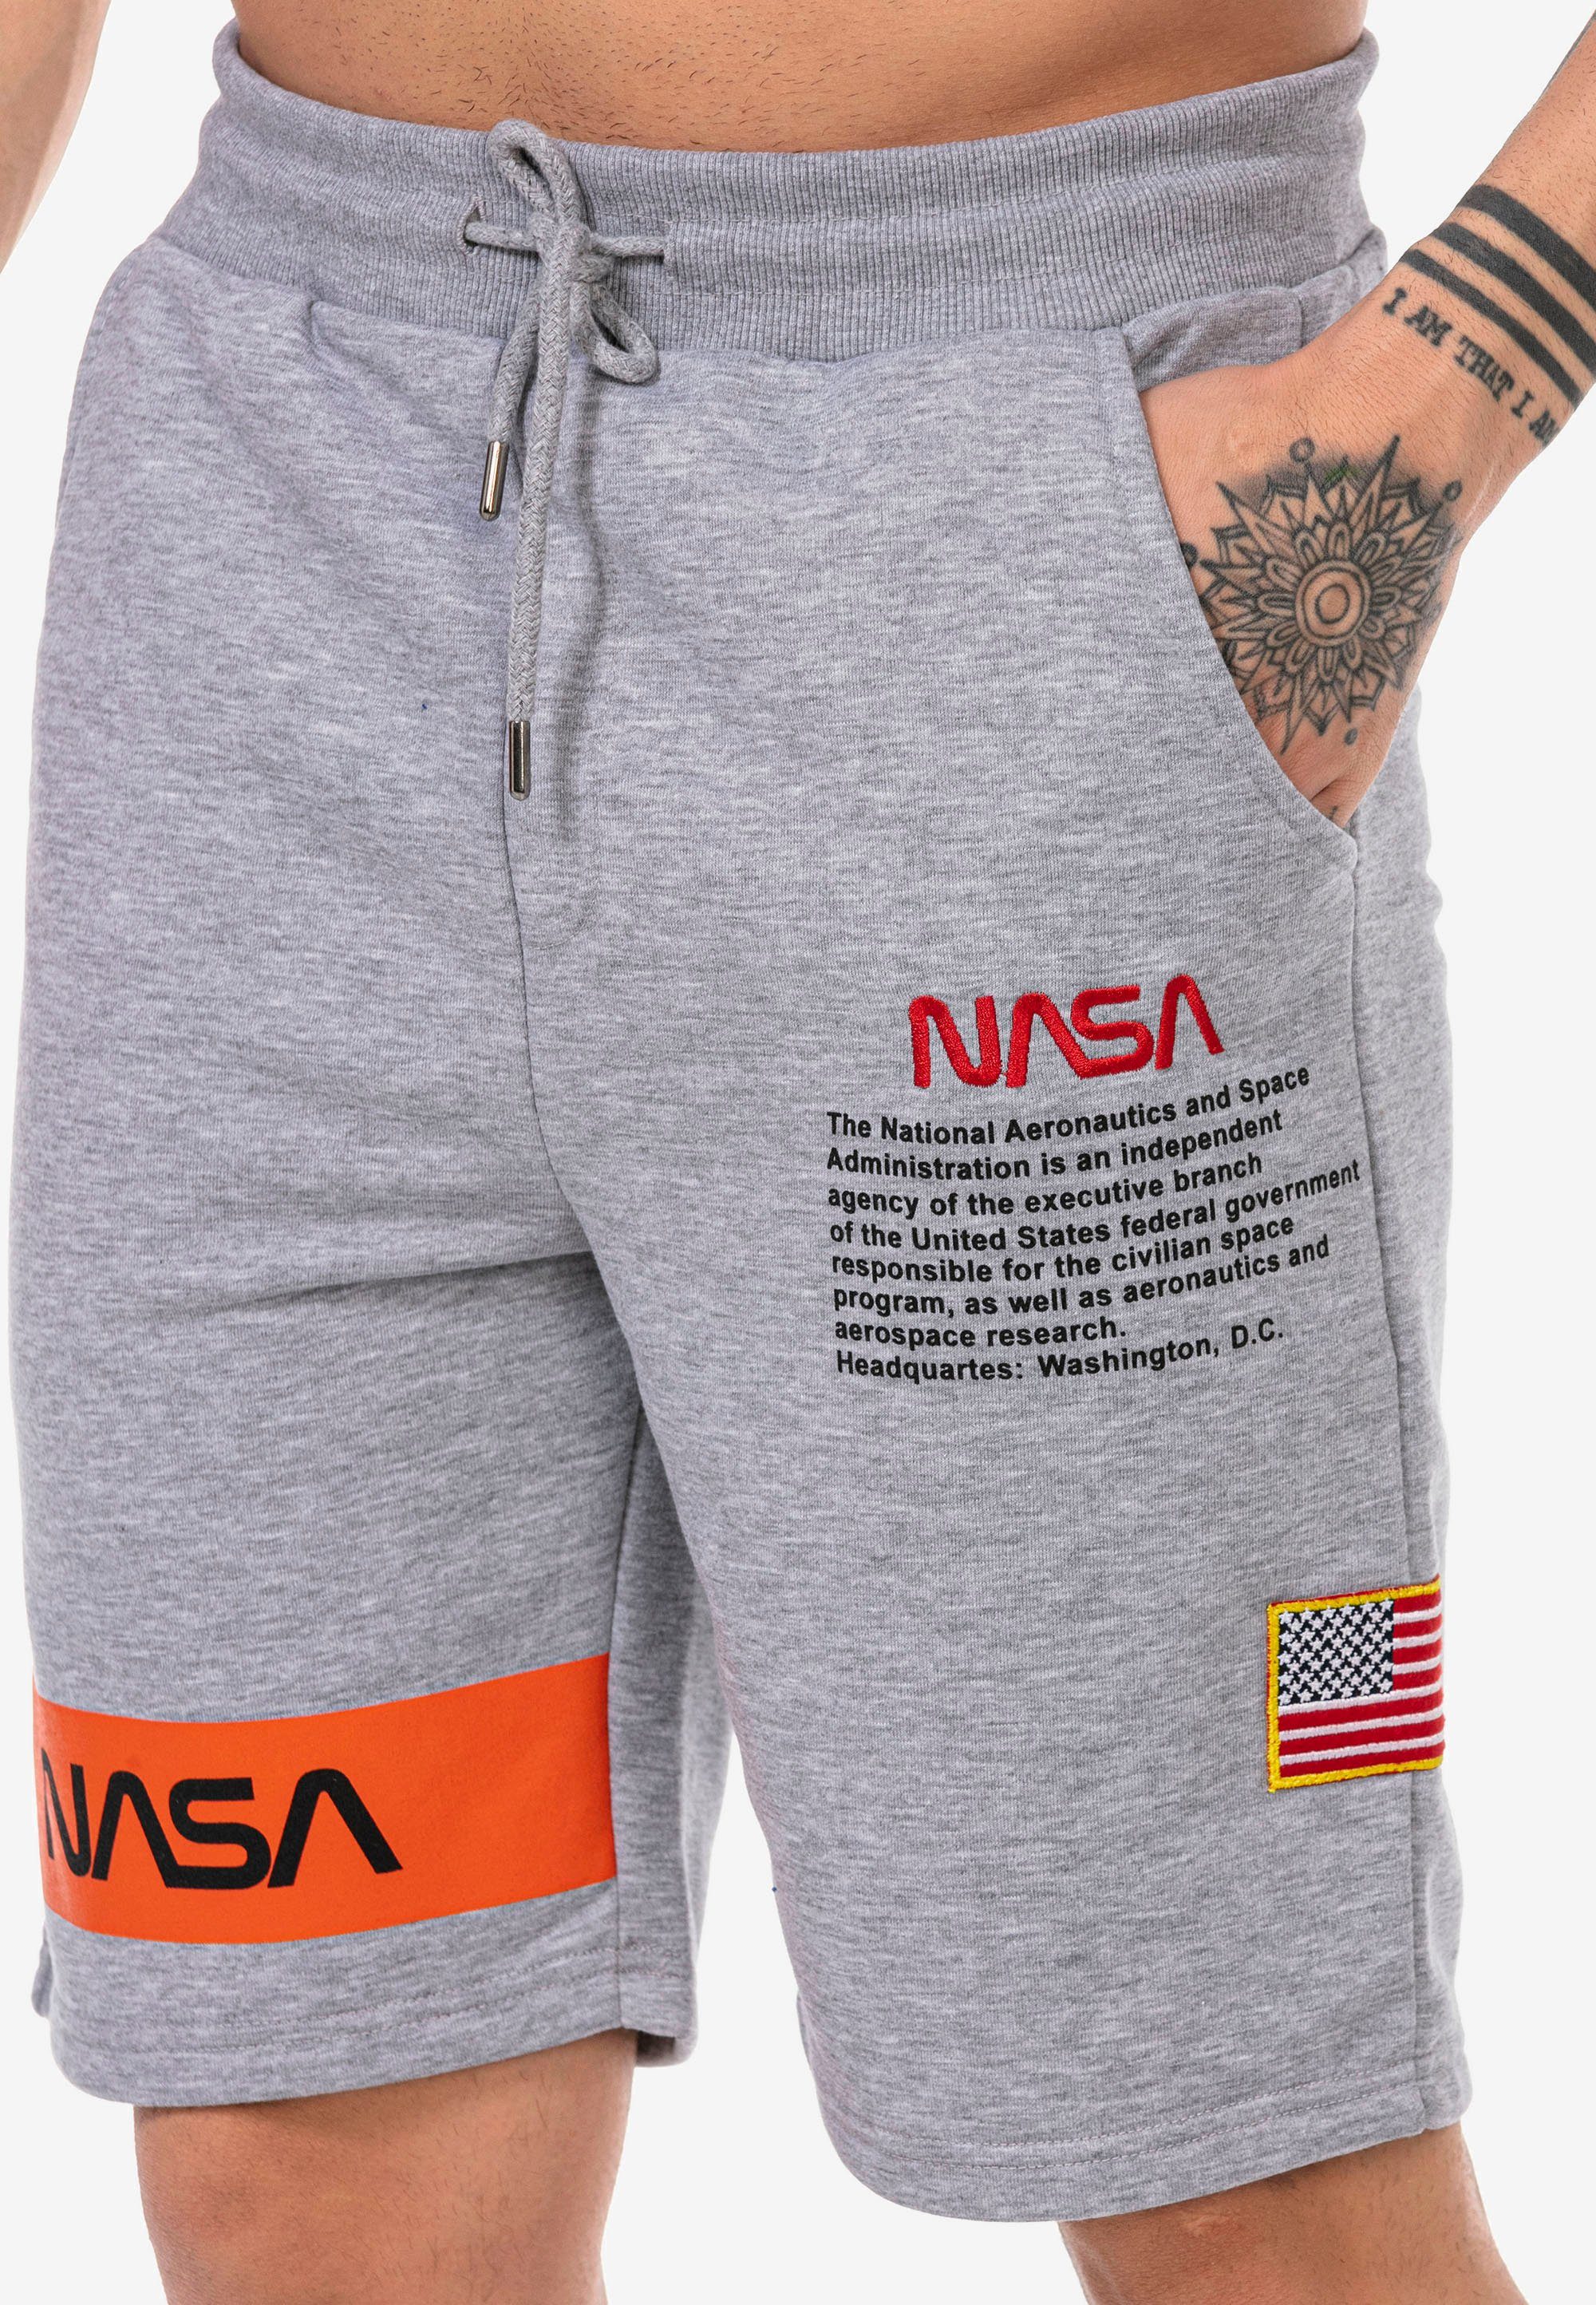 Shorts Plano gesticktem NASA-Motiv RedBridge grau-weiß mit